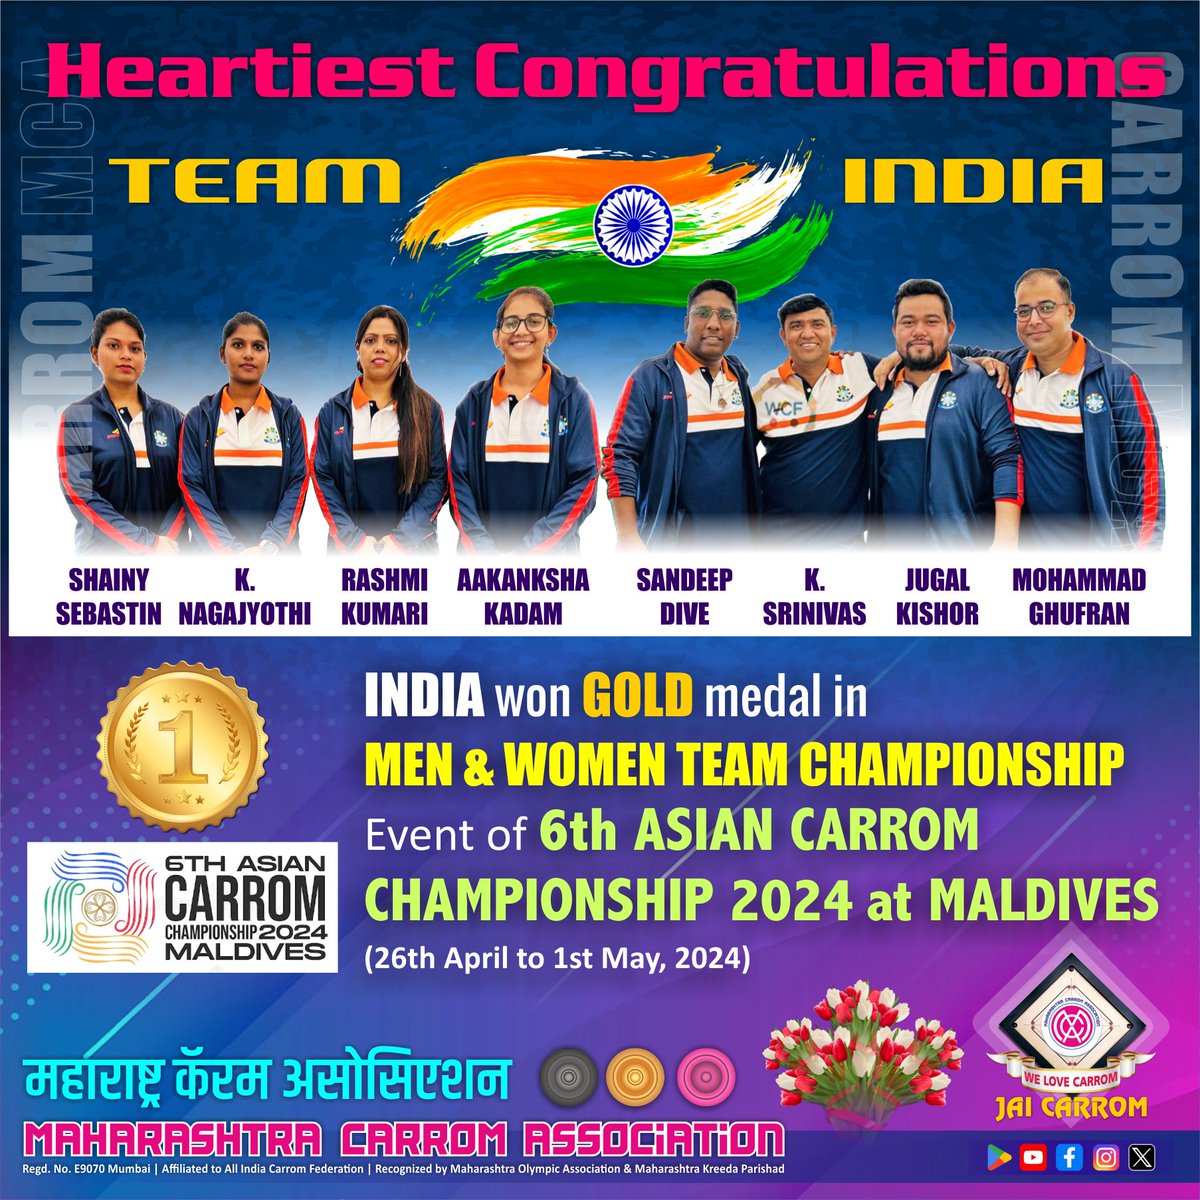 Heartiest Congratulations! INDIAN CARROM TEAM.
INDIA won GOLD Medal in MEN & WOMEN TEAM CHAMPIONSHIP Event of 6th ASIAN CARROM CHAMPIONSHIP 2024 at MALDIVES (26th Apr to 1st May, 2024). JAI CARROM ❤️ CARROM!

 @followers @YASMinistry @kheloindia @KheloIndiaMH @MahaDGIPR